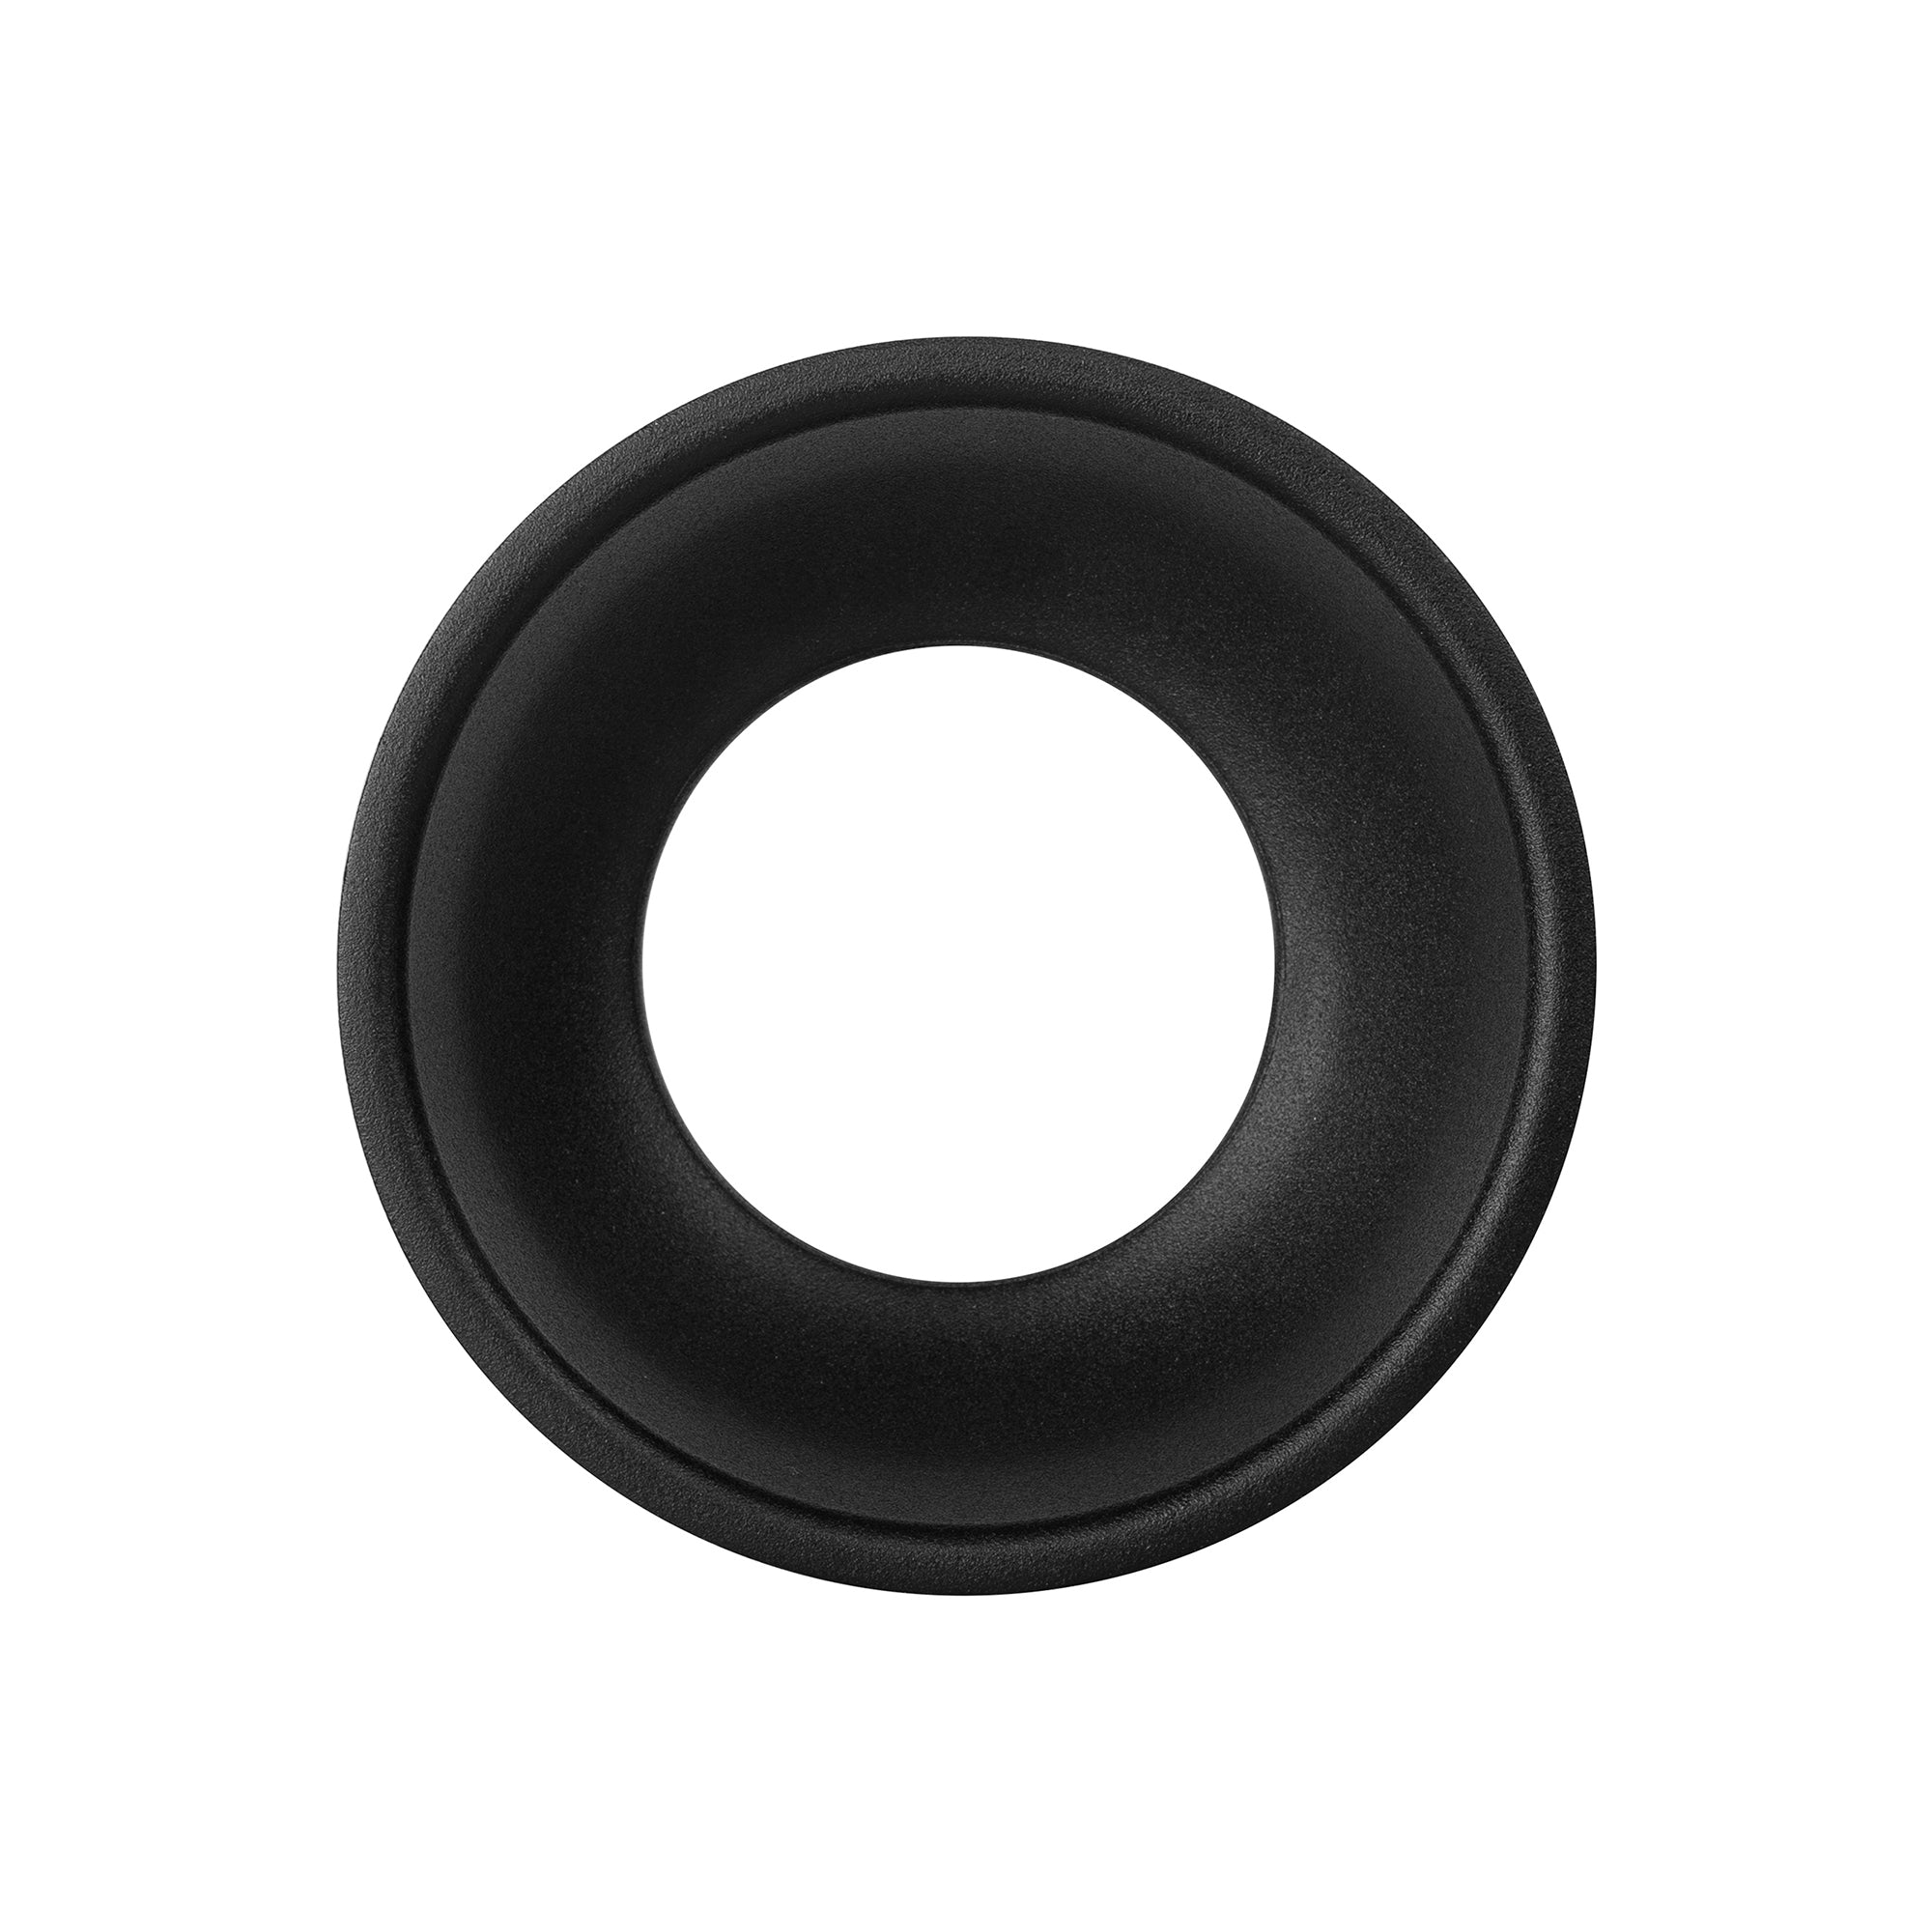 HV5842-BR - Black Inner Ring to Suit HV5842 12w Surface Mounted LED Downlight